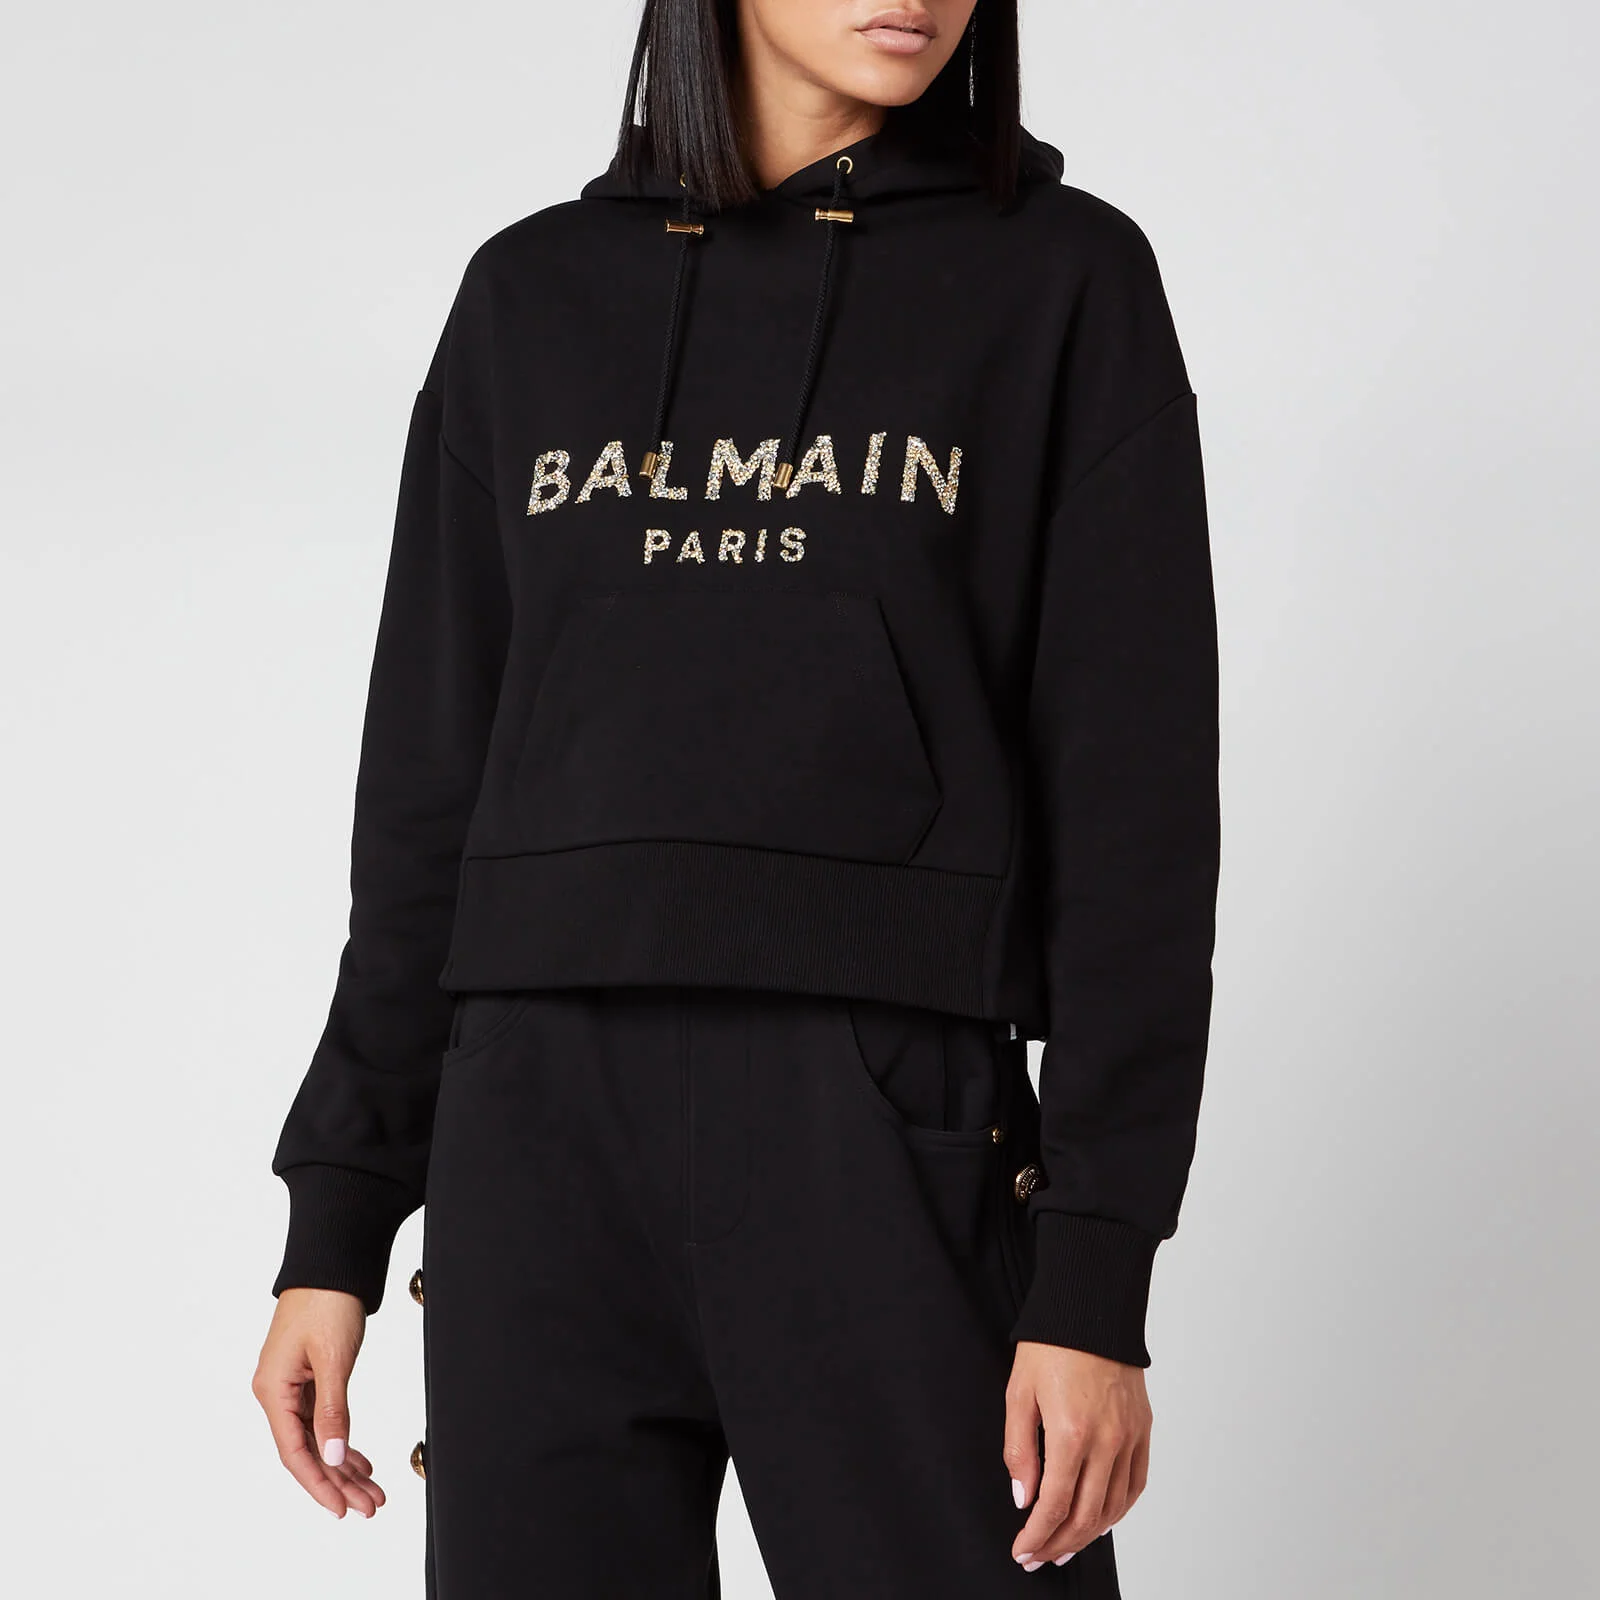 Balmain Women's Cropped Sequined Logo Hoodie - Black Image 1